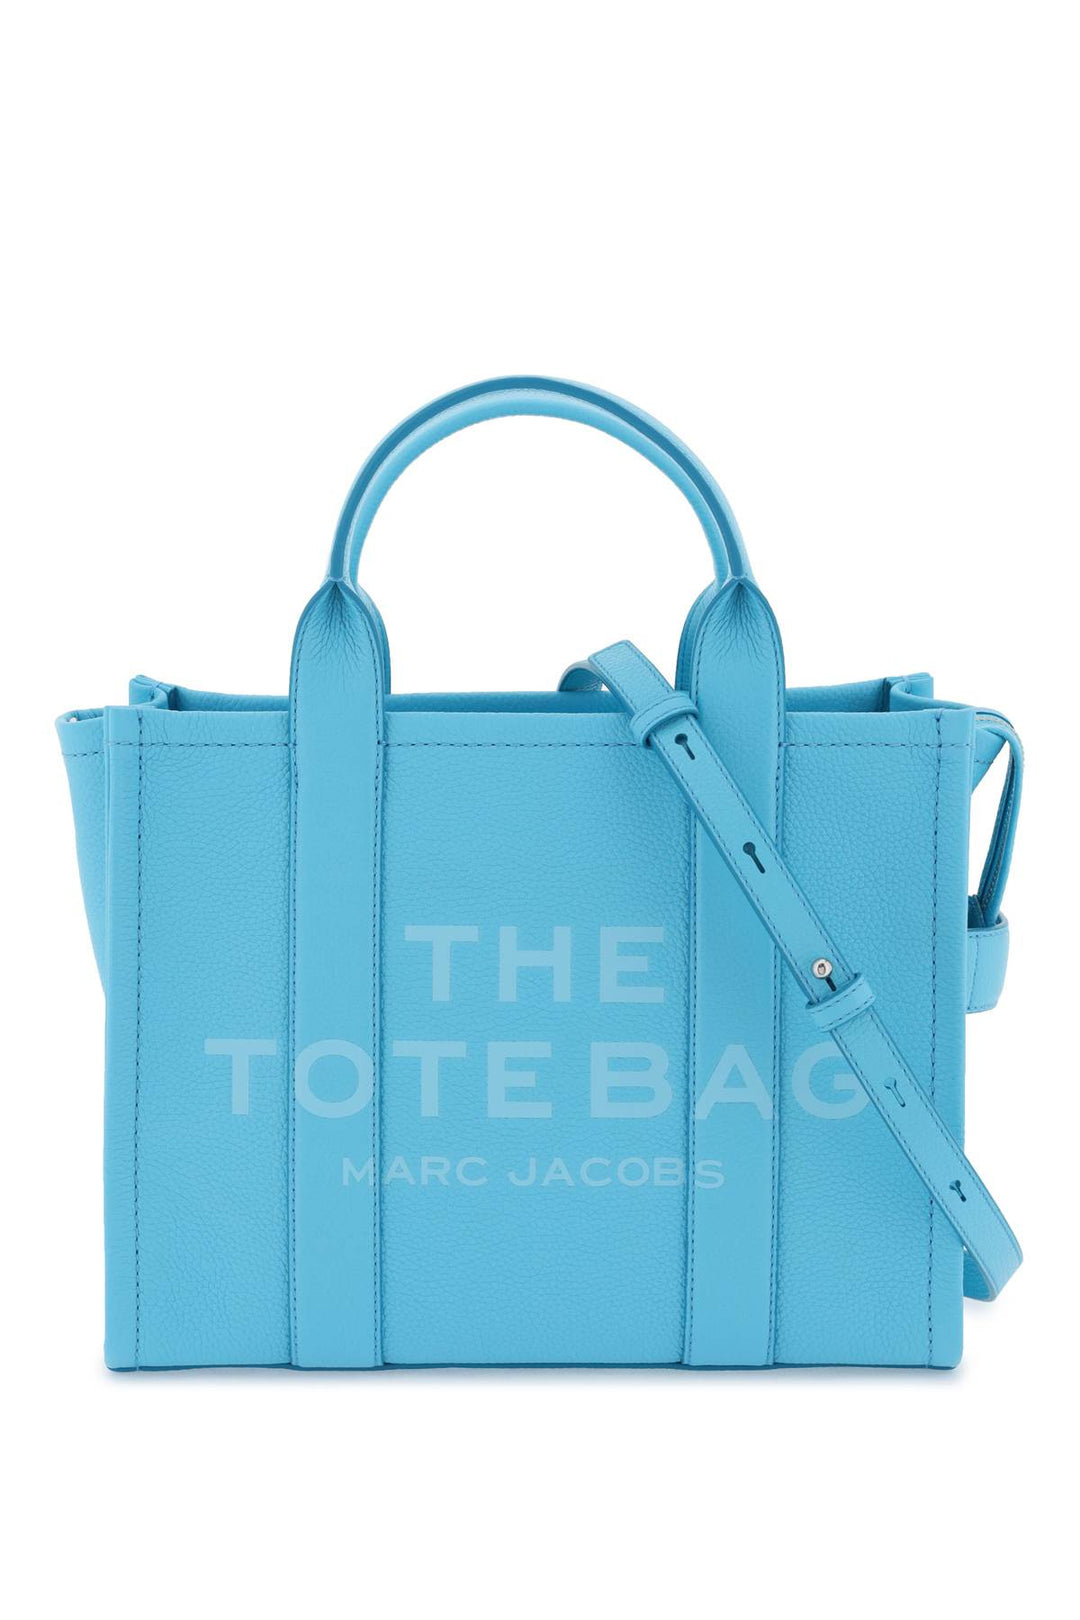 Borsa 'The Leather Medium Tote Bag' - Marc Jacobs - Donna